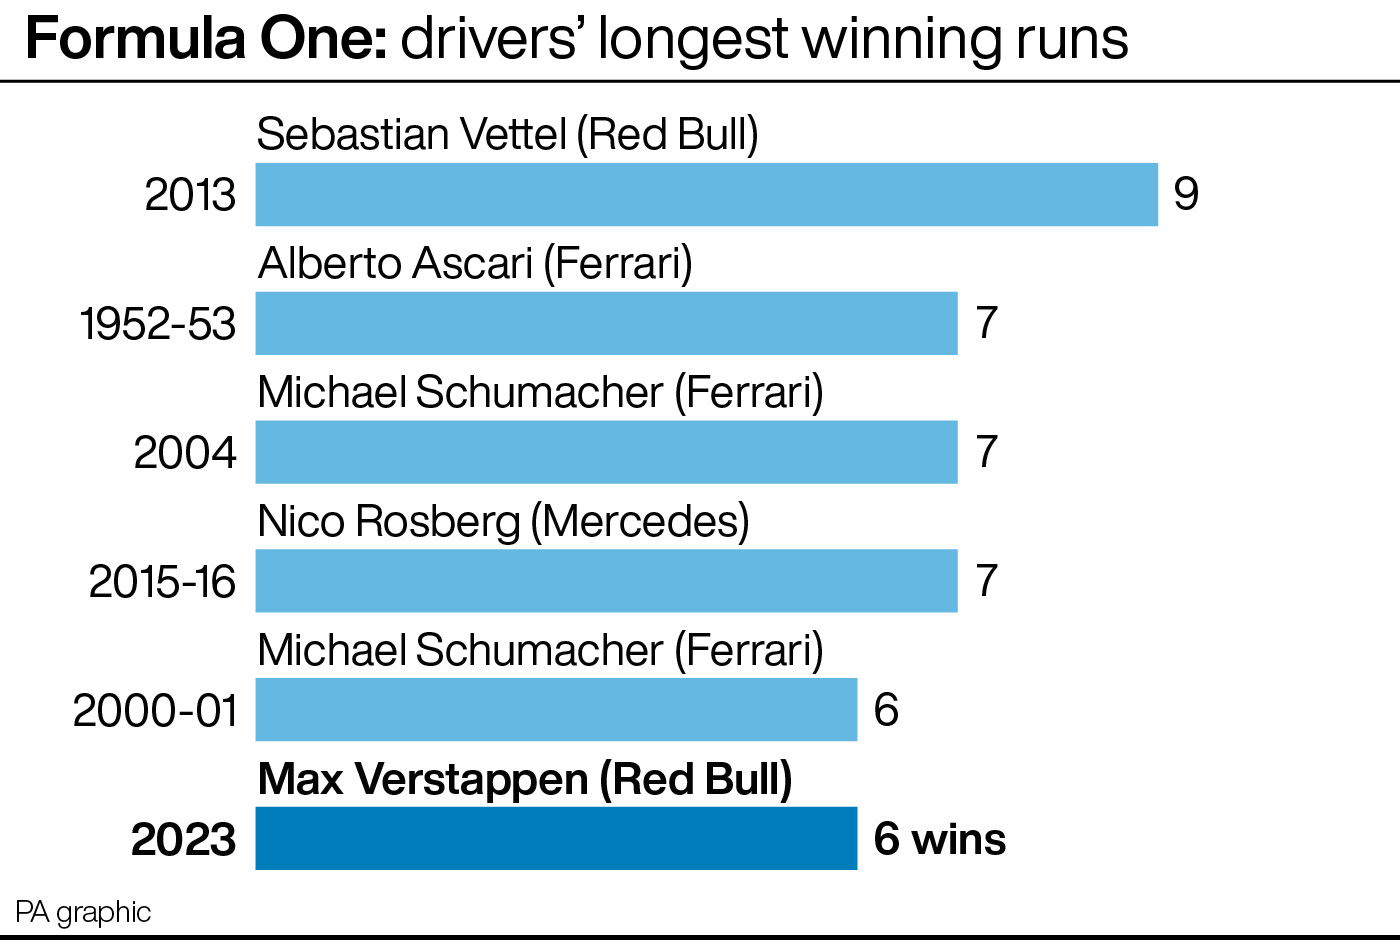 Formula One: longest winning run by a single driver (graphic)